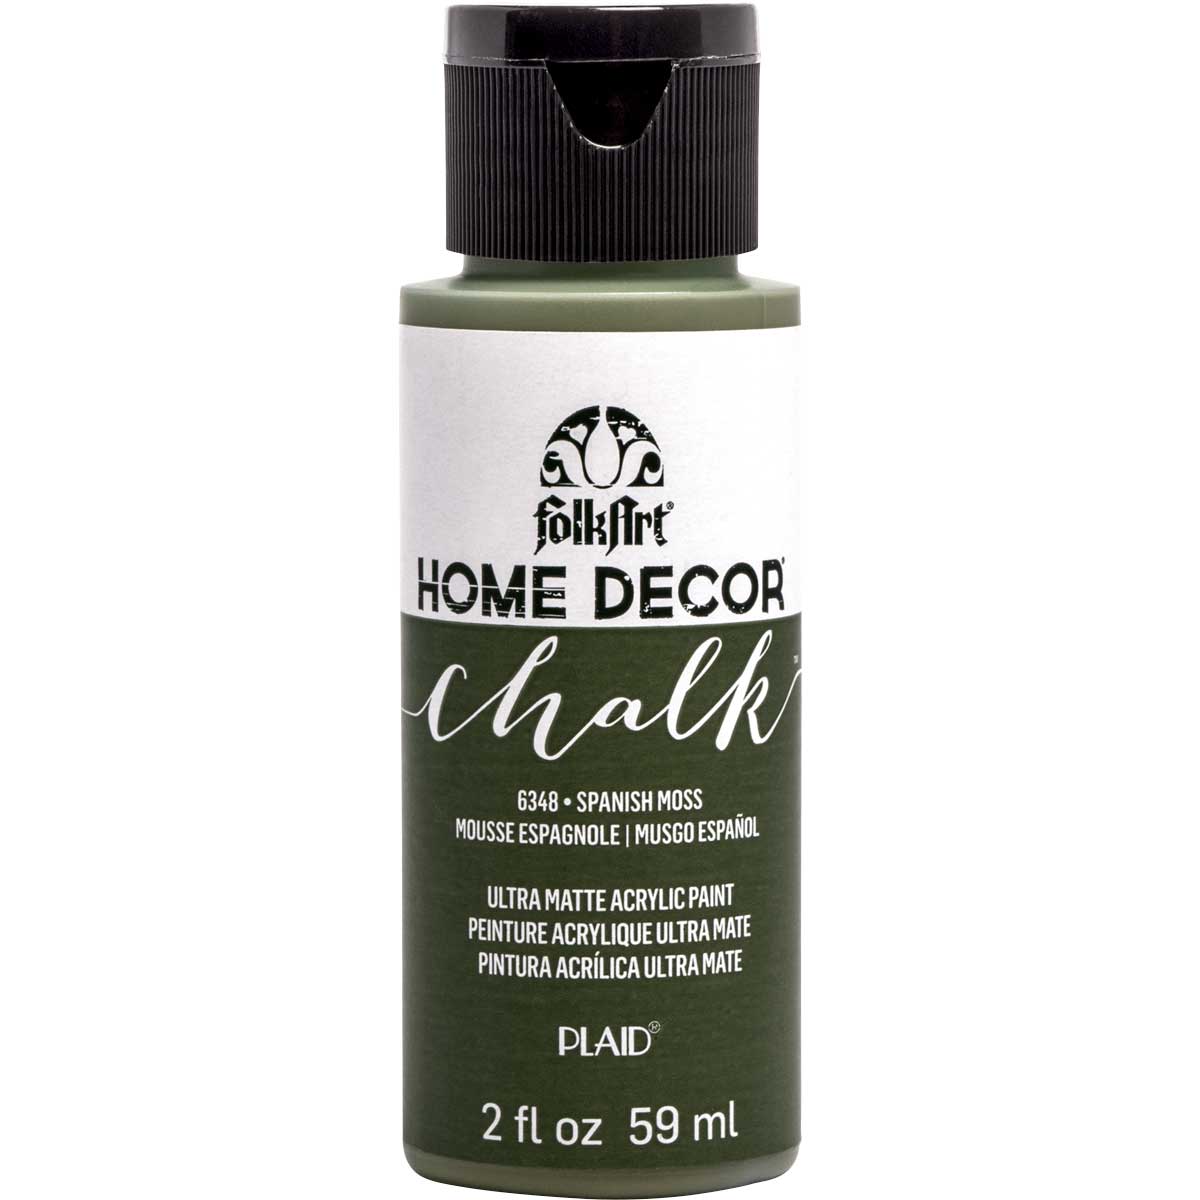 FolkArt Home Decor Chalk - Spanish Moss, 2 oz. - 6348